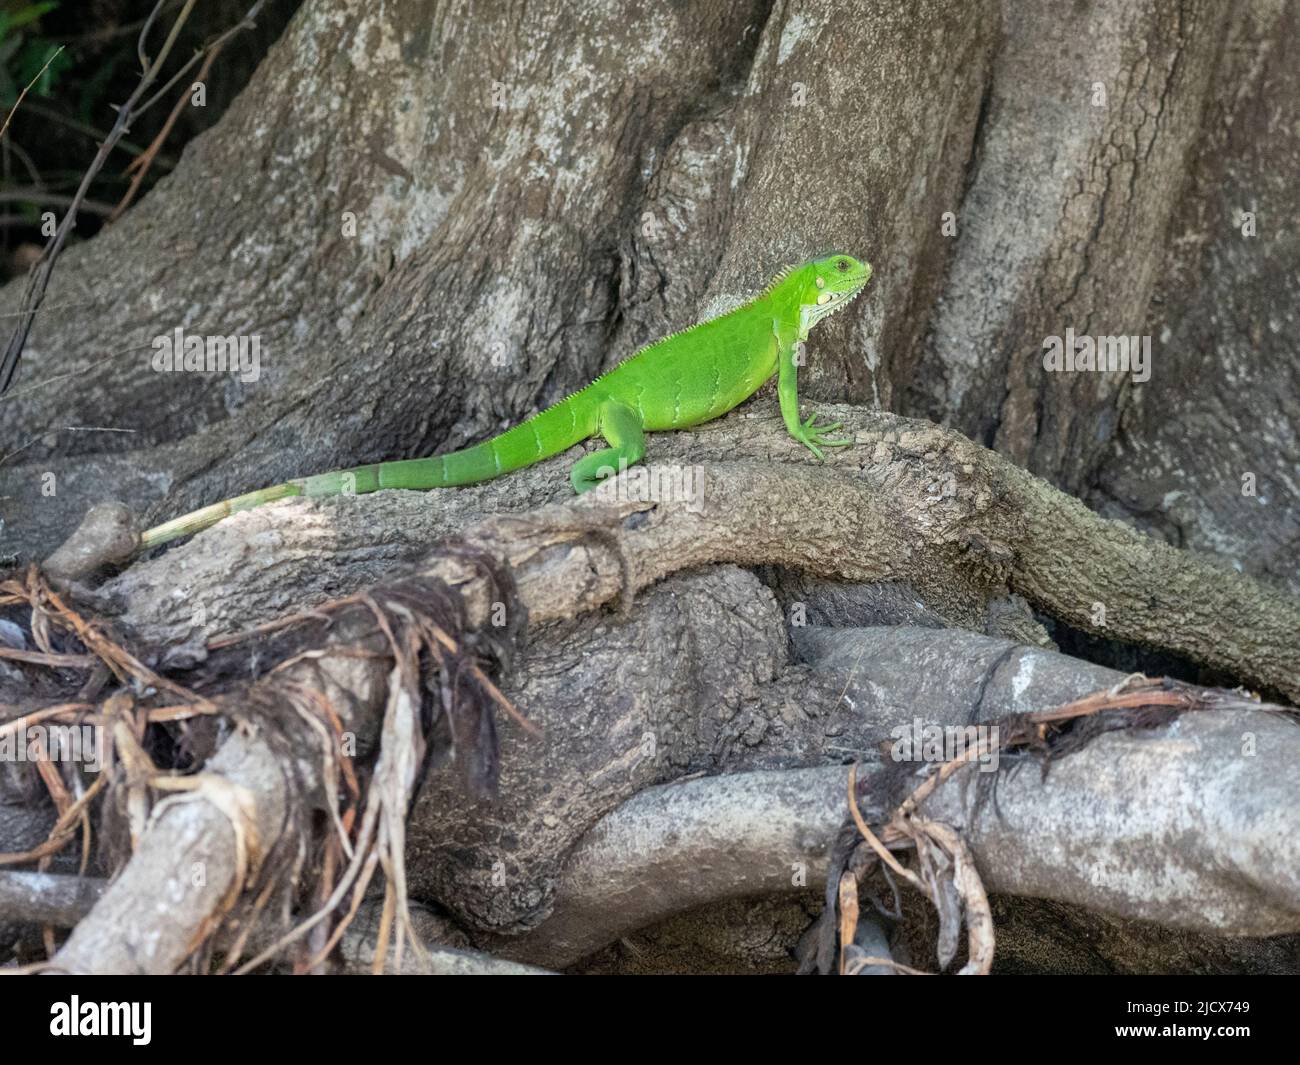 Iguana verde adulta (Iguana iguana), tomando el sol en las orillas del Río Tres Irmao, Mato Grosso, Pantanal, Brasil, Sudamérica Foto de stock